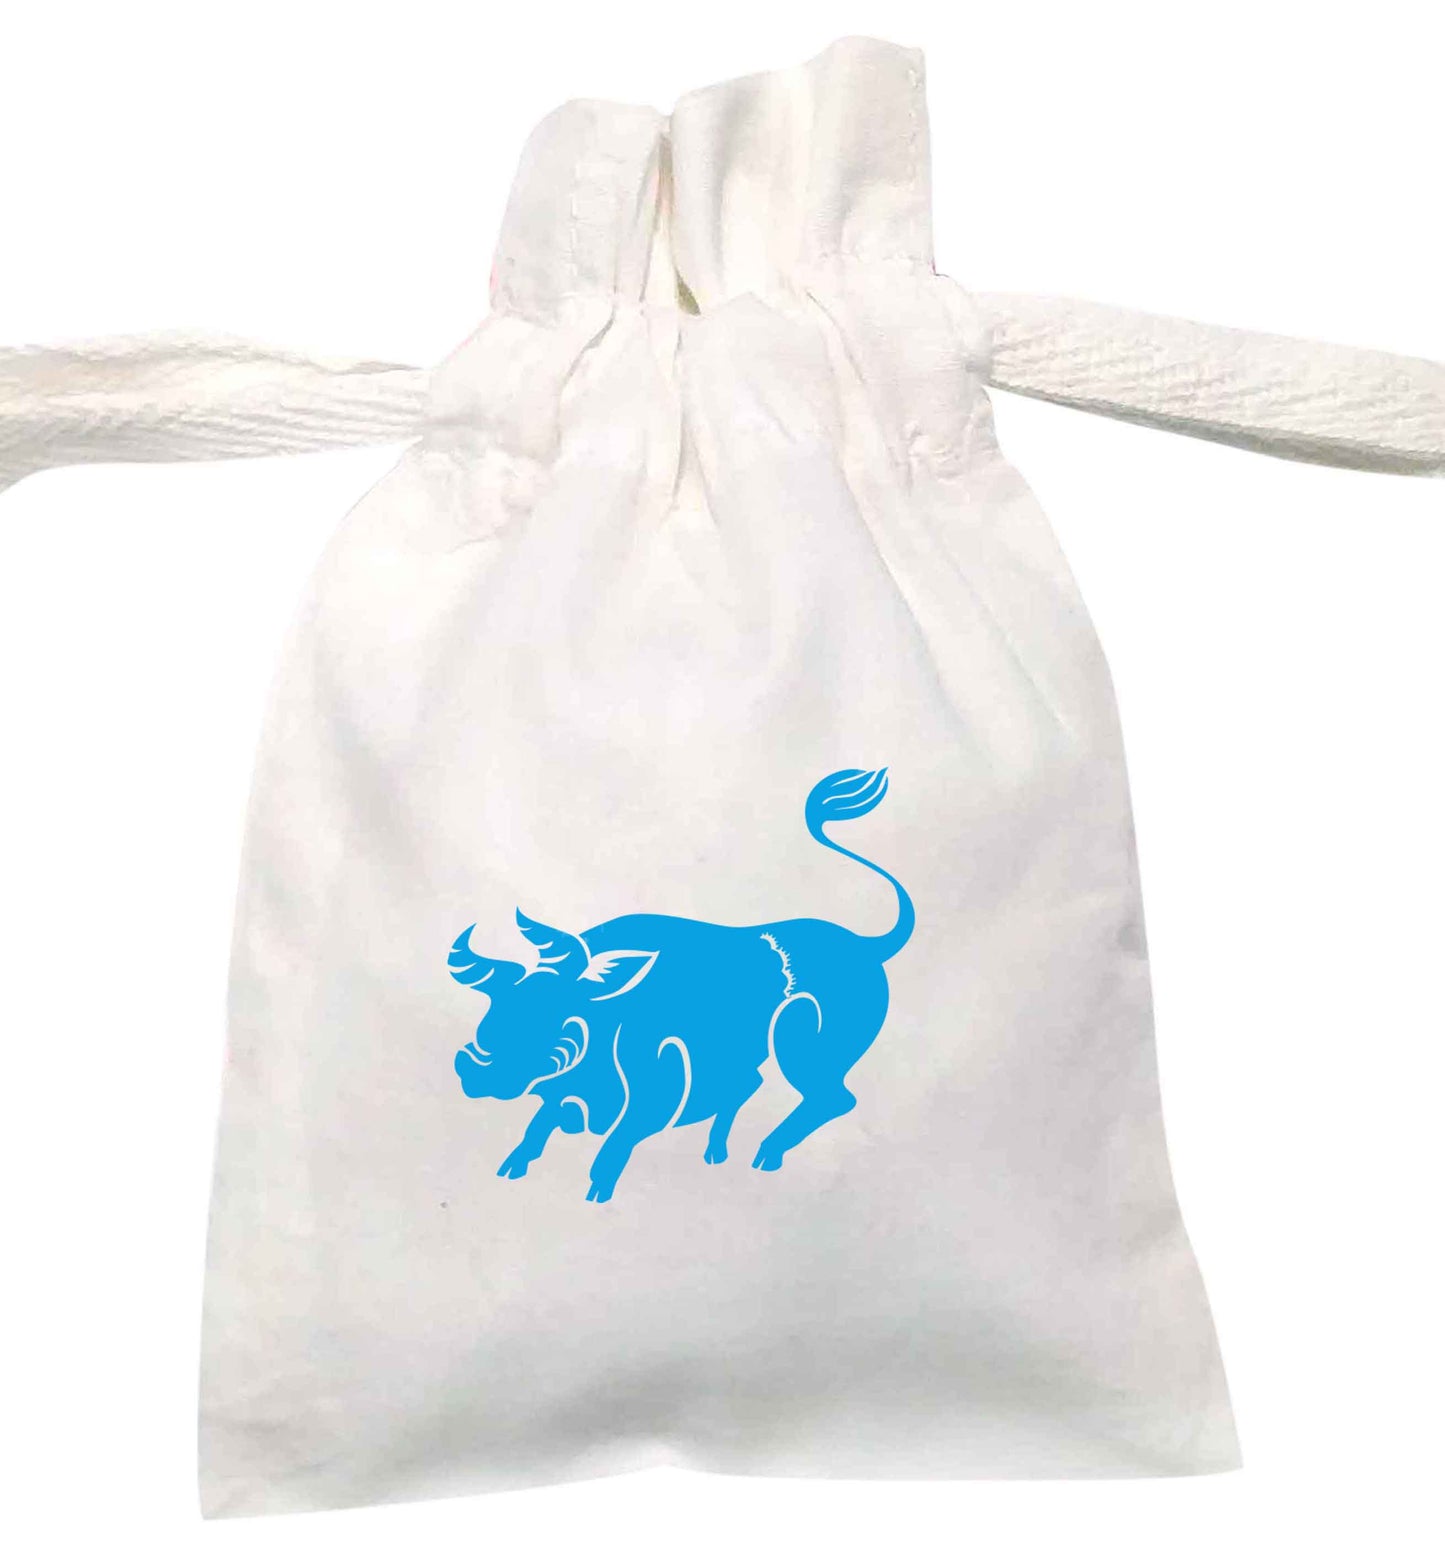 Pig face | XS - L | Pouch / Drawstring bag / Sack | Organic Cotton | Bulk discounts available!